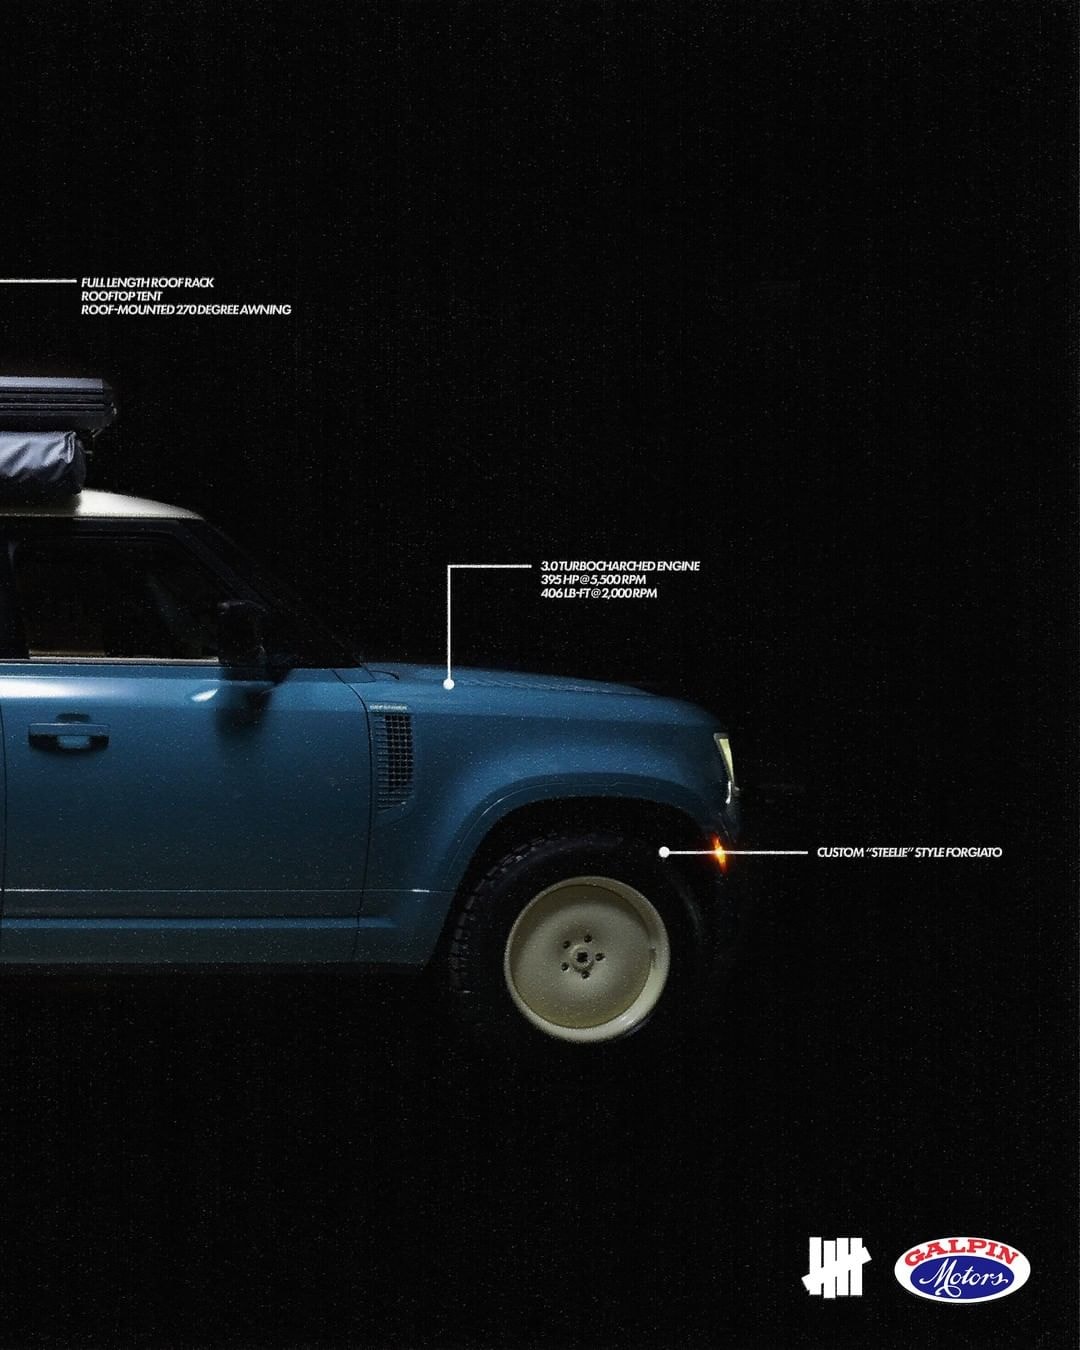 UNDEFEATED 攜手 Galpin Motors 打造 Land Rover Defender 定製車款